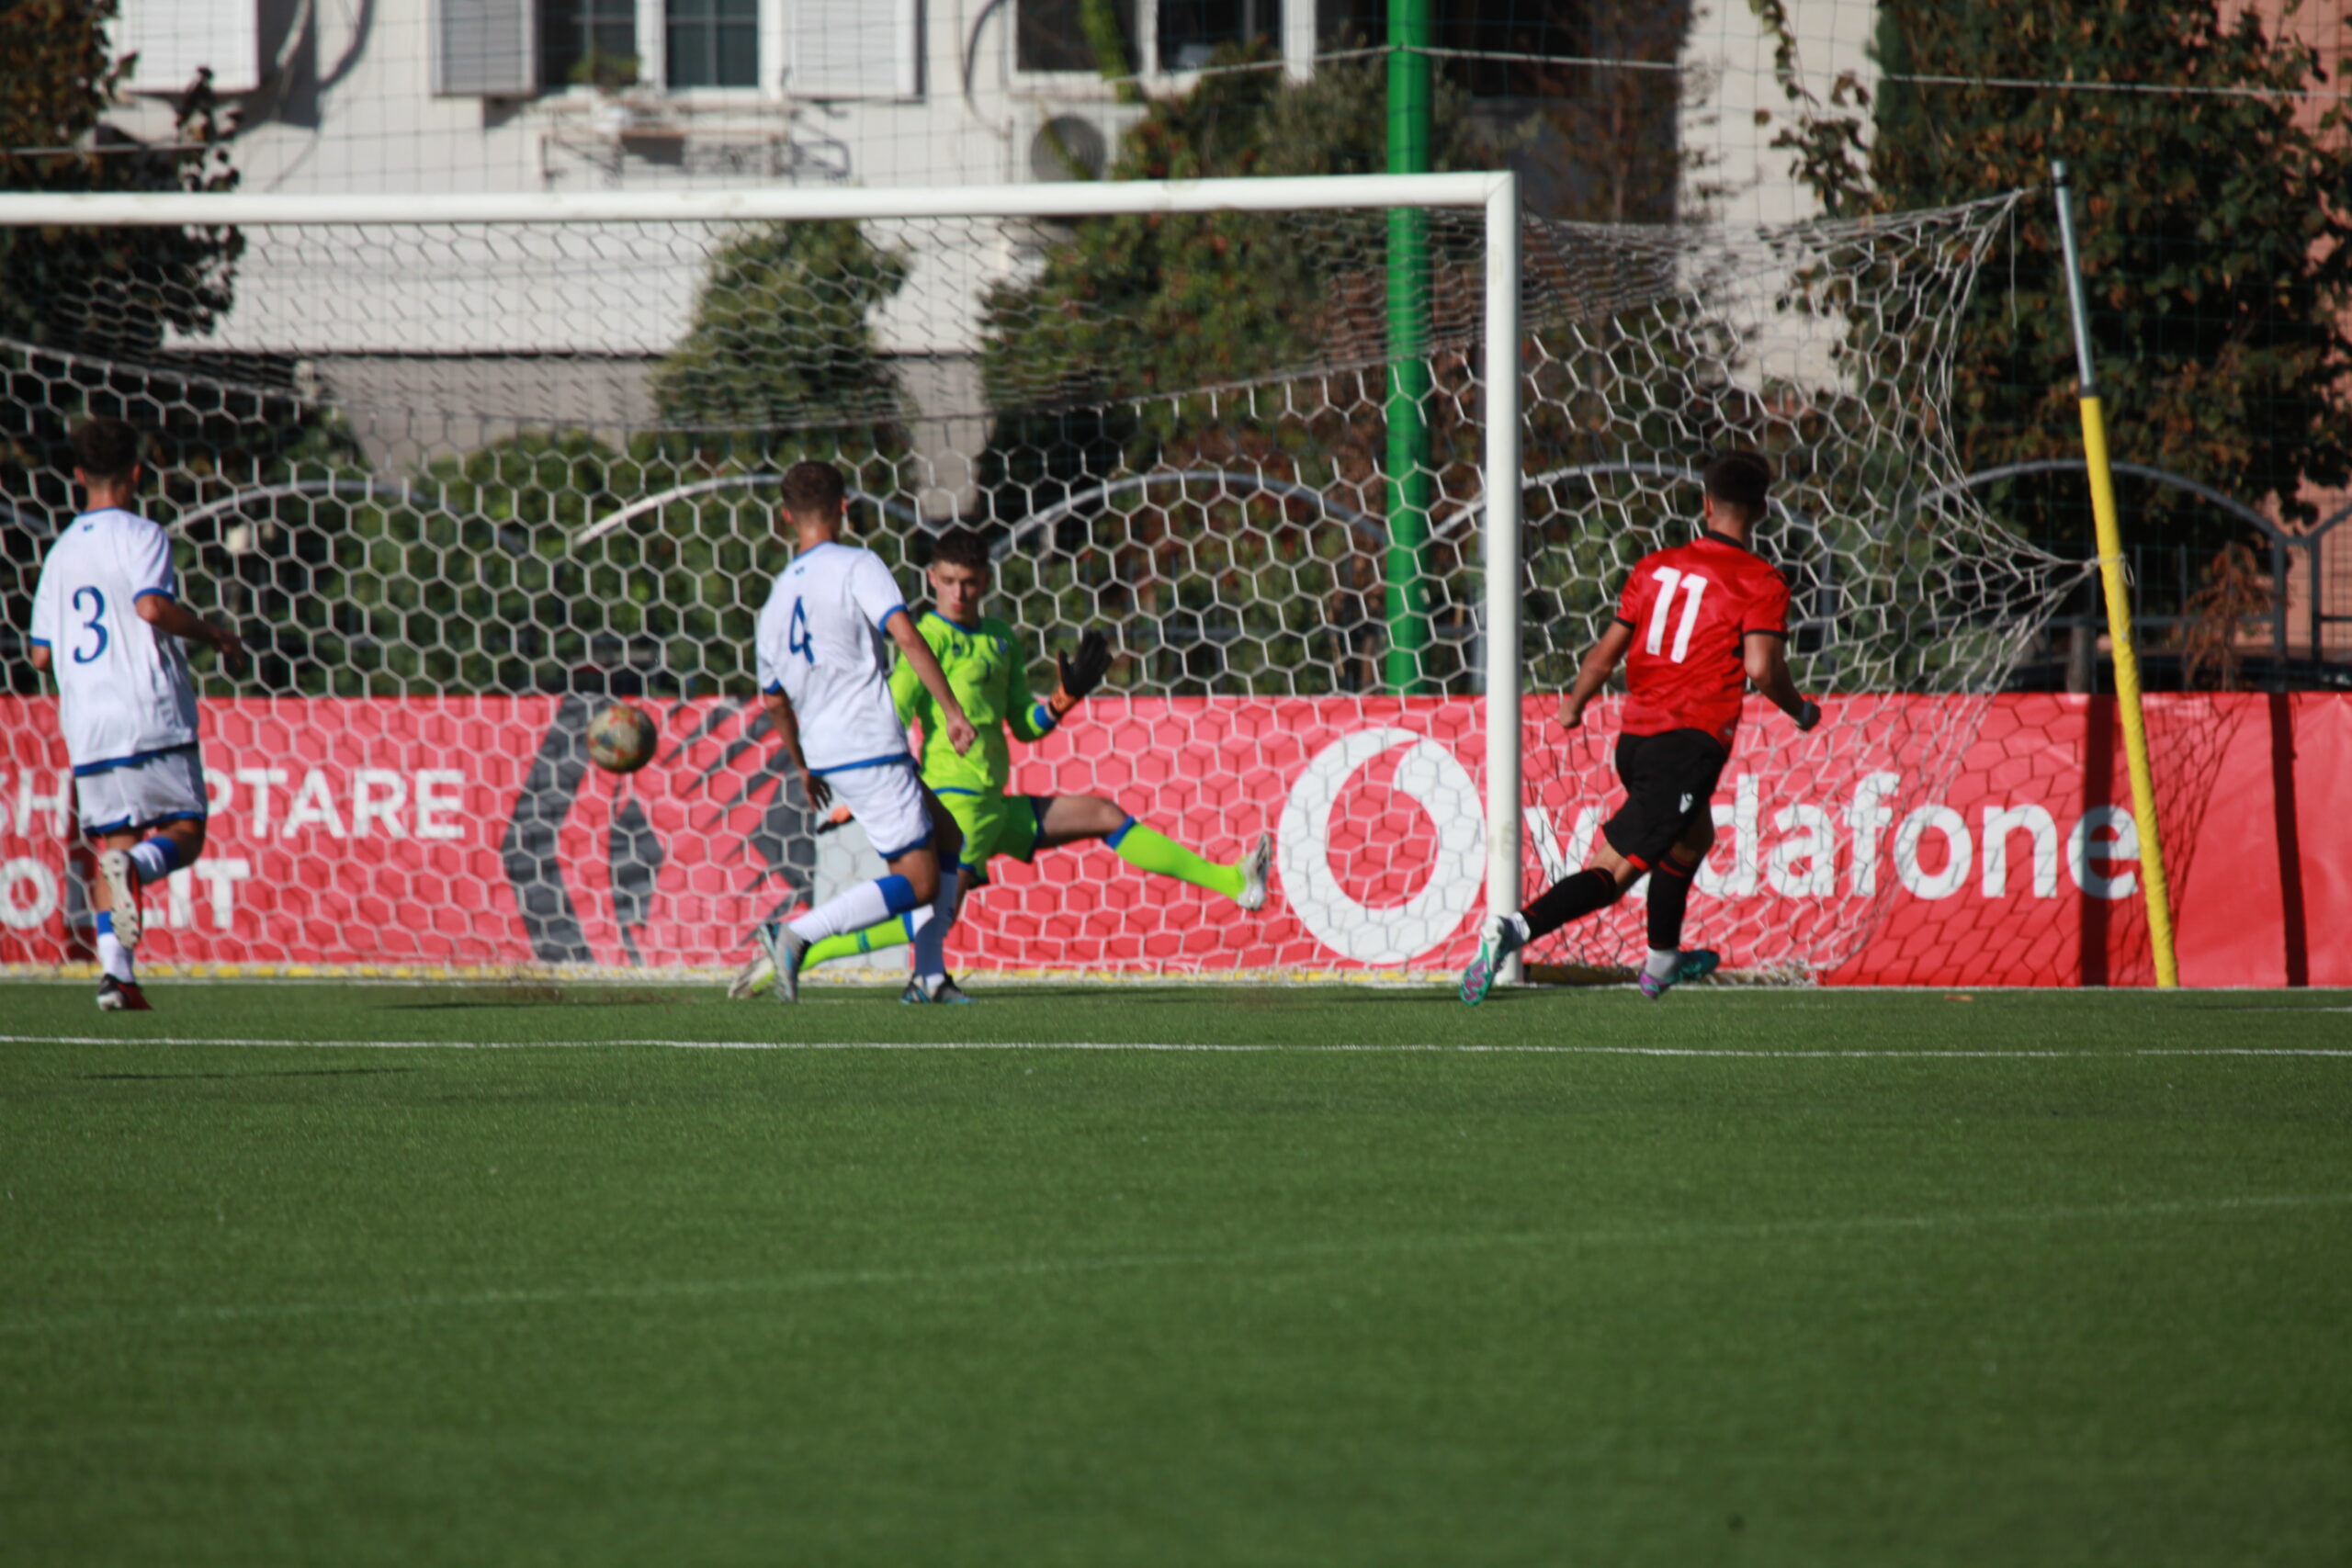 fshf mirepret turneun uefa development u 16 per djem marrin pjese shqiperia kosova san marino belize